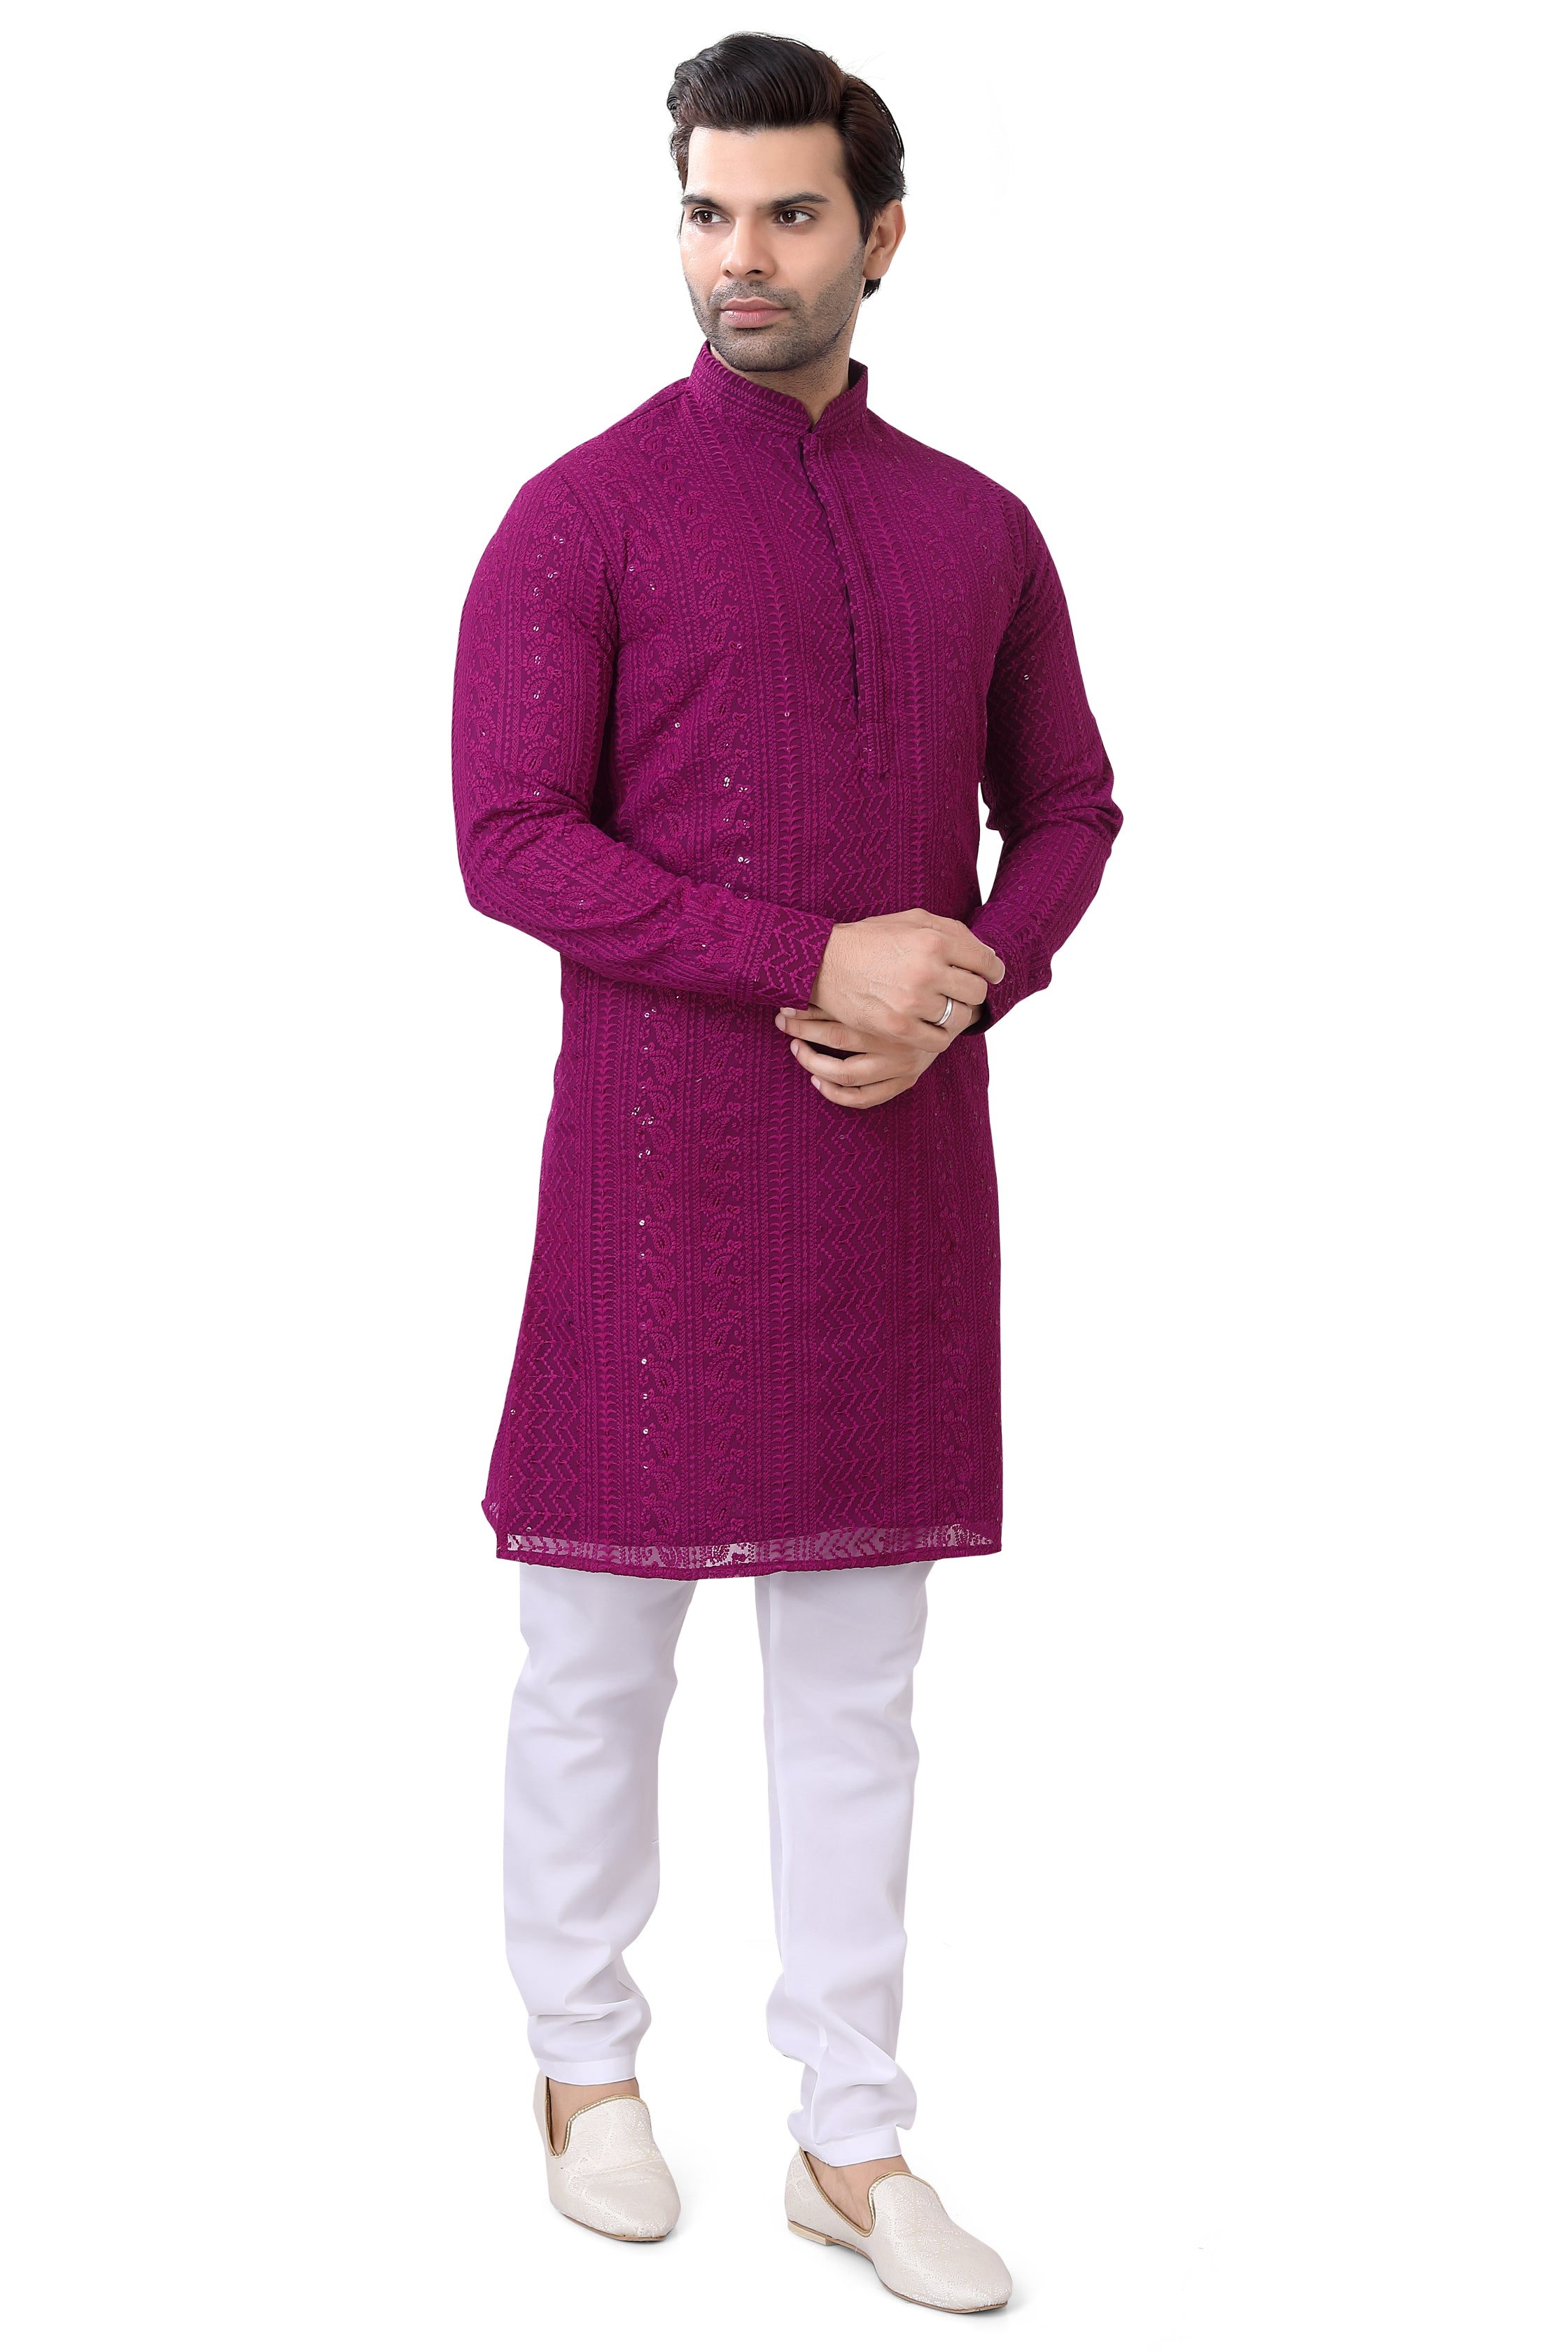 Lucknowi Kurta Pajama Set in Wine Colour- LCKP-009